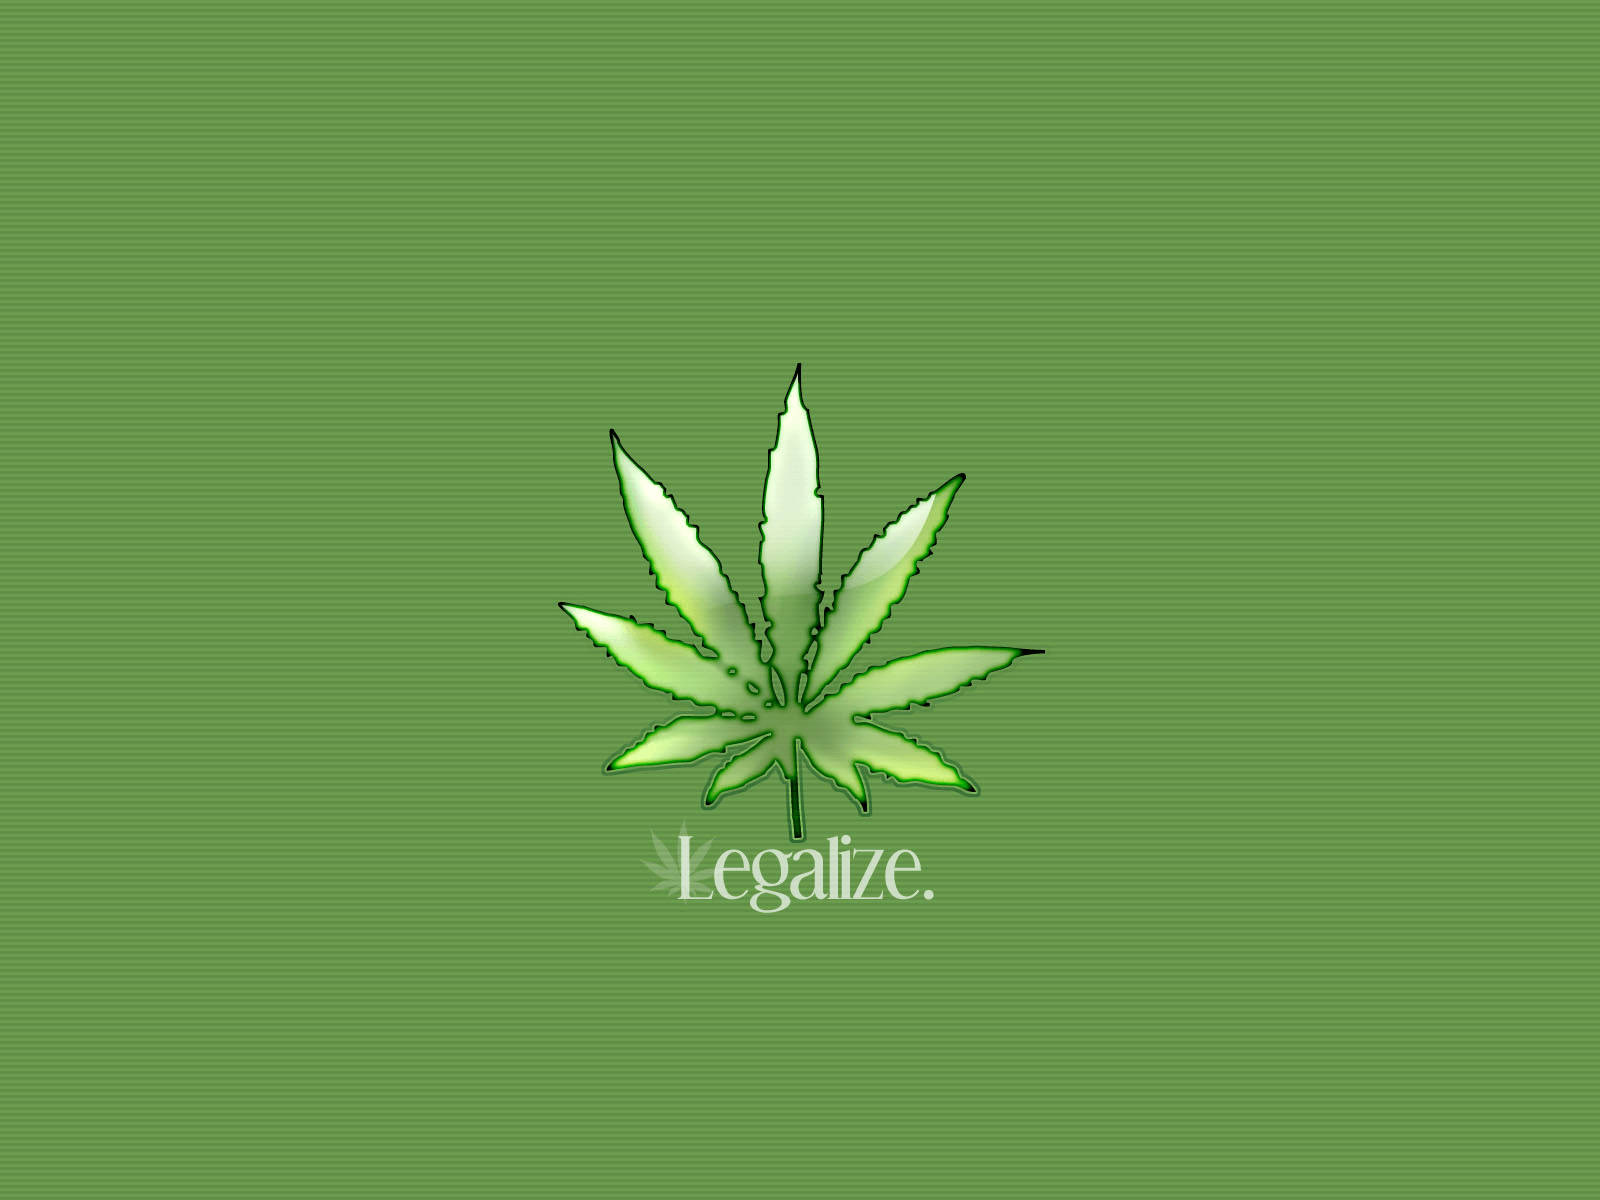 Legalize Cannabis Poster Wallpaper